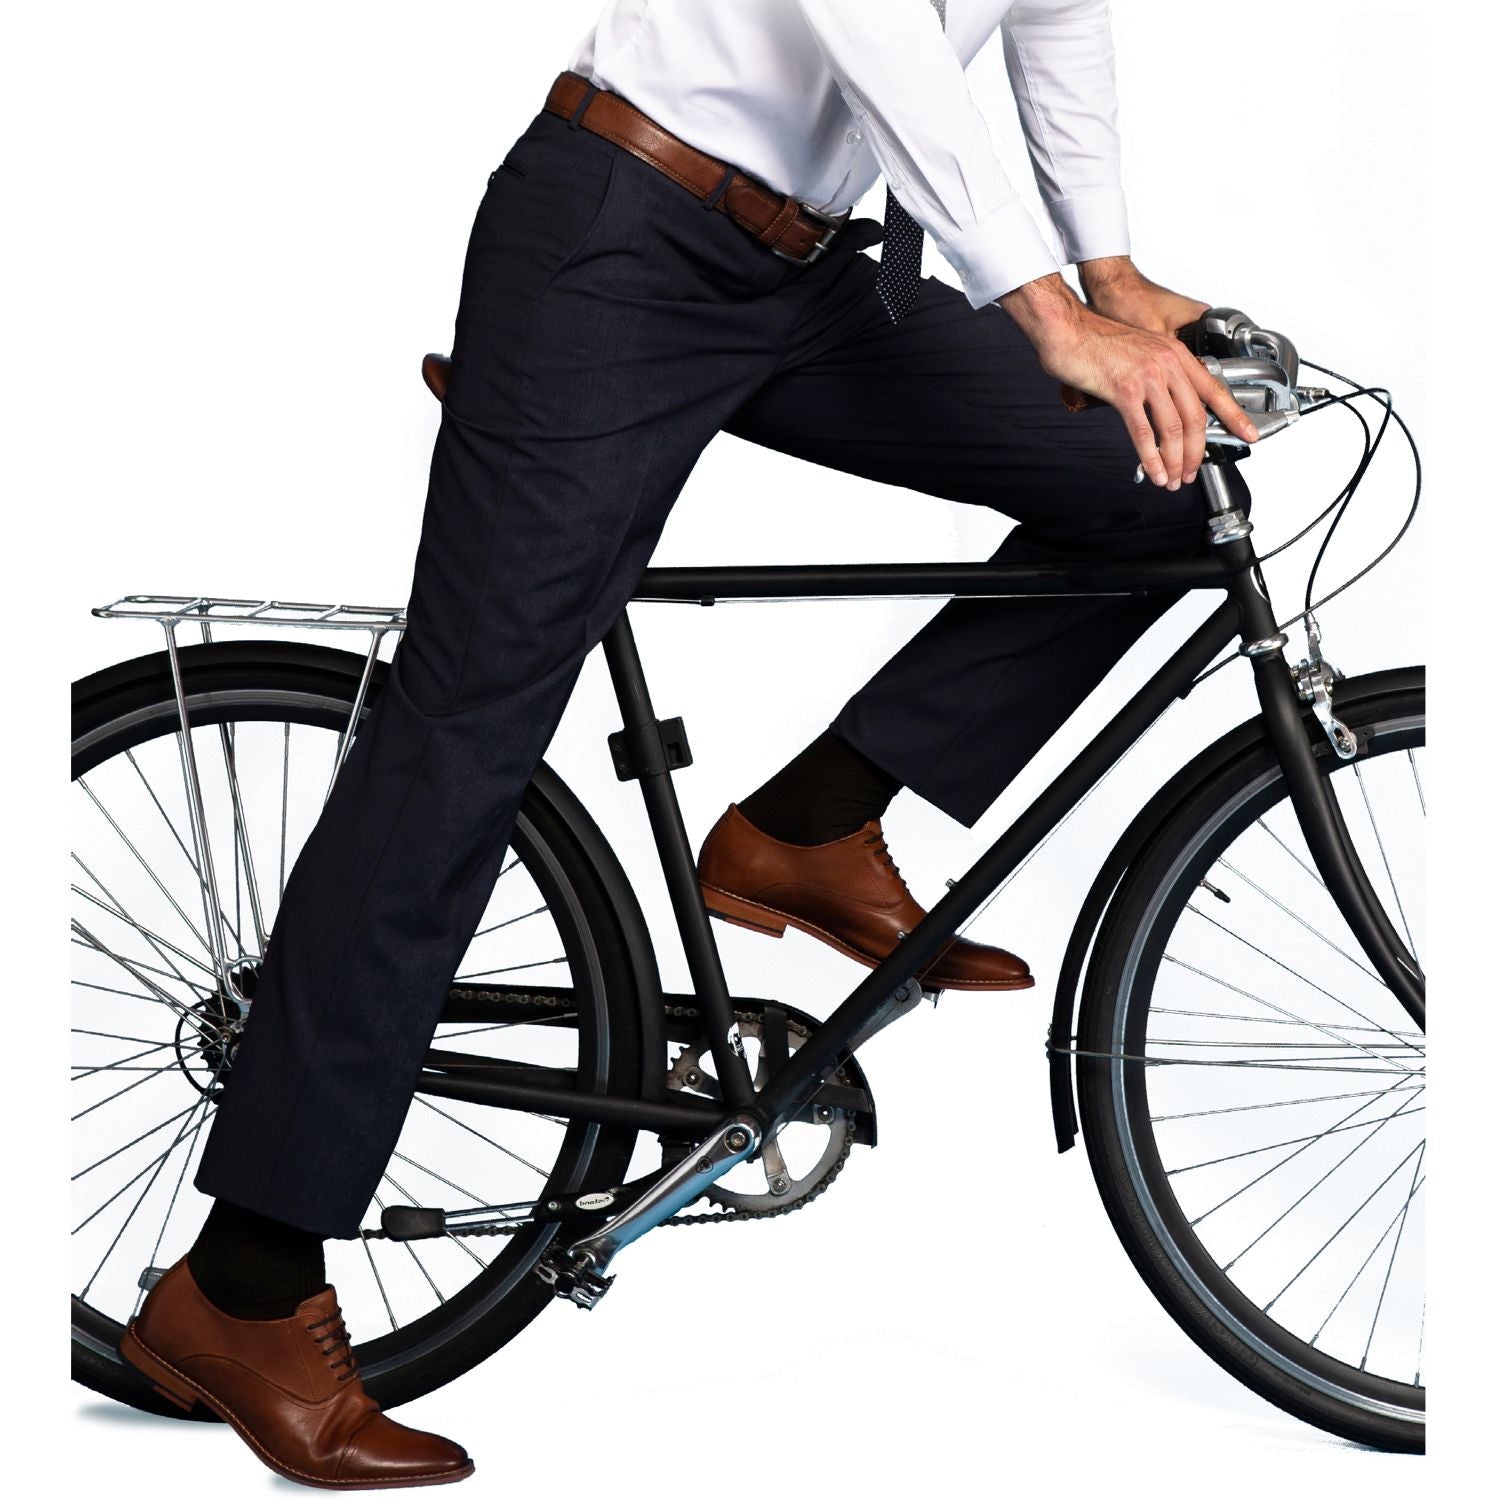 Performance Wool Blend Commuter Bi-Stretch Serge Comfort-EZE Trouser in Tan Mix (Flat Front Models) by Ballin